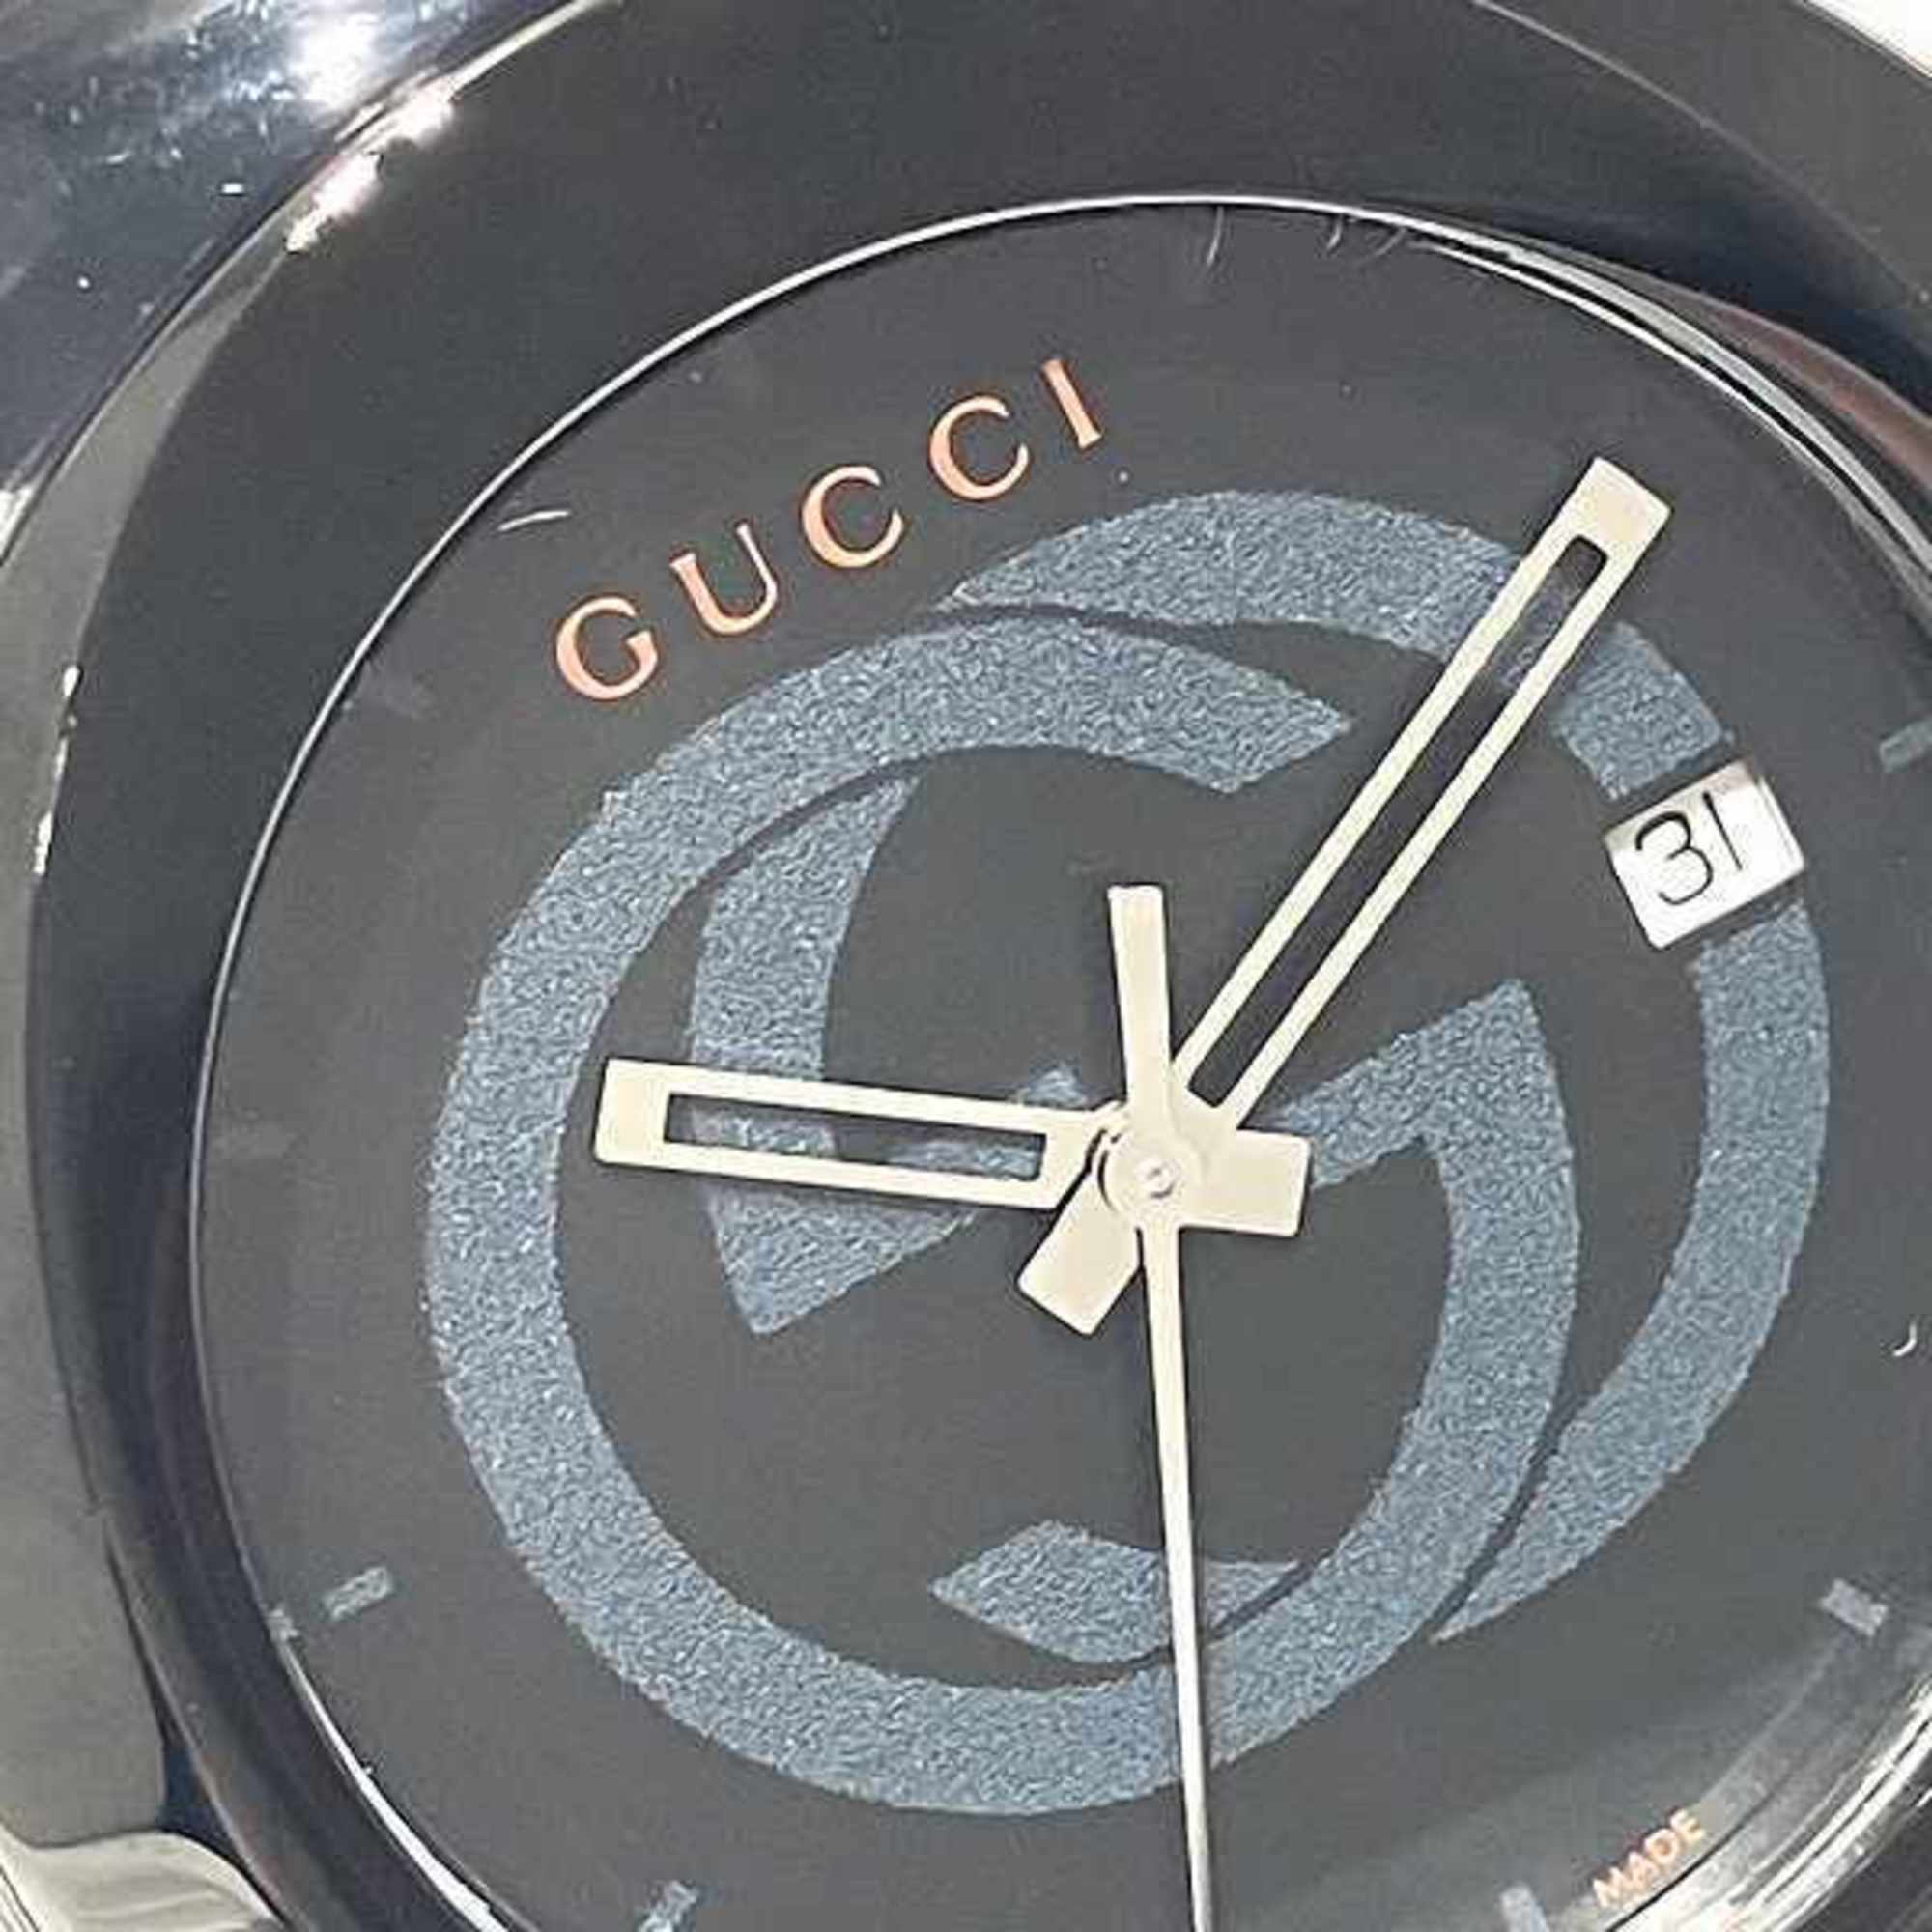 GUCCI sink 137.1 quartz black dial watch men's